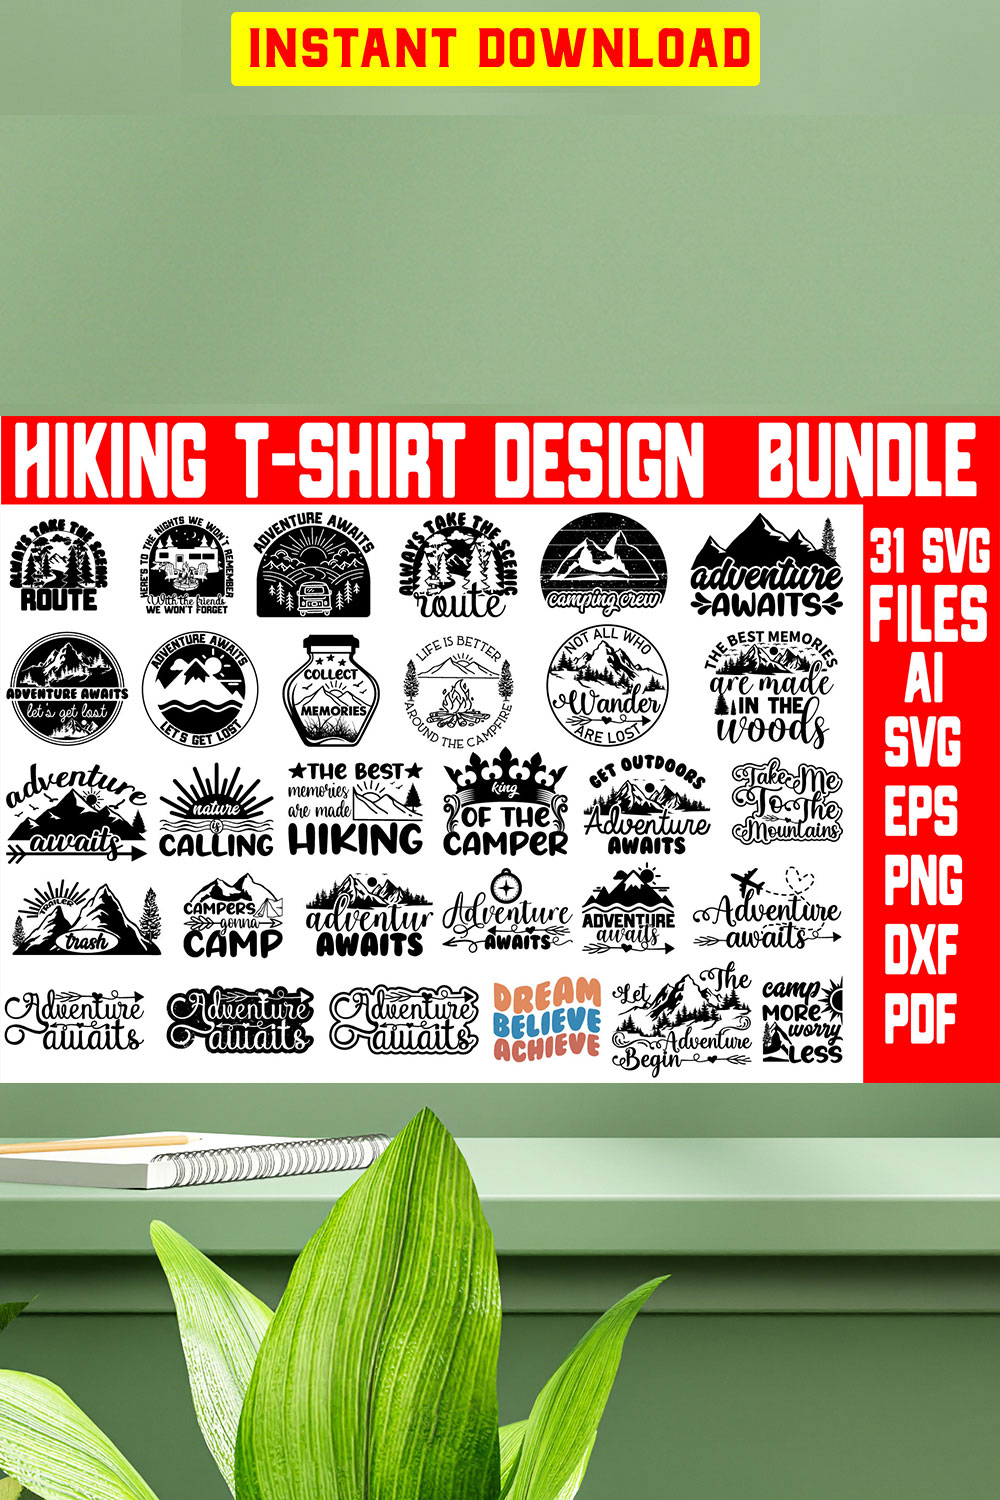 Hiking T-shirt Design Bundle pinterest preview image.